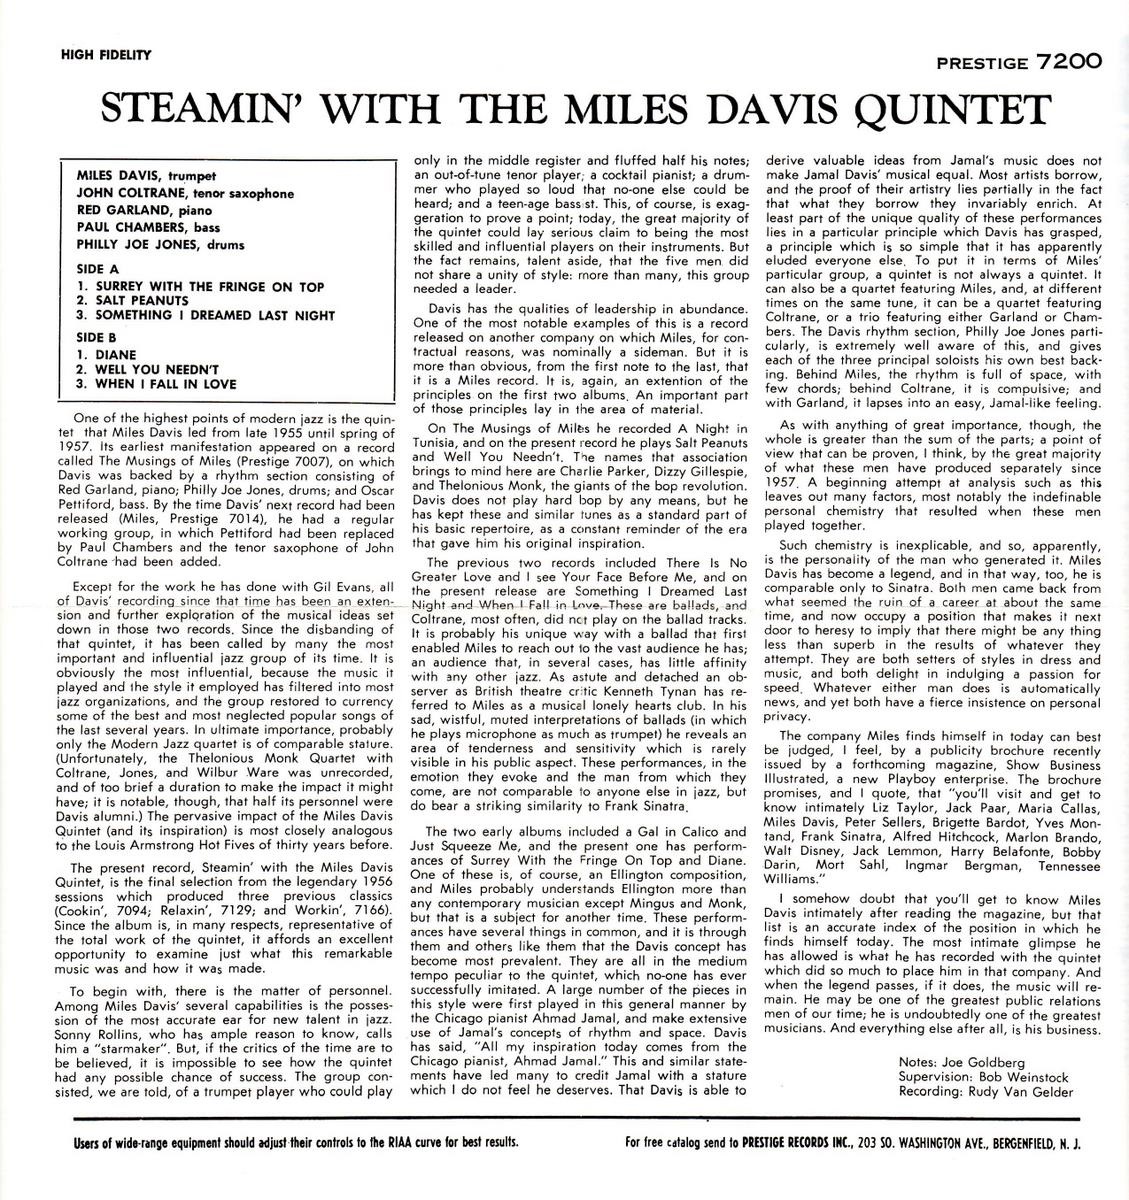 Steamin' with the Miles Davis Quintet (PRLP 7200)